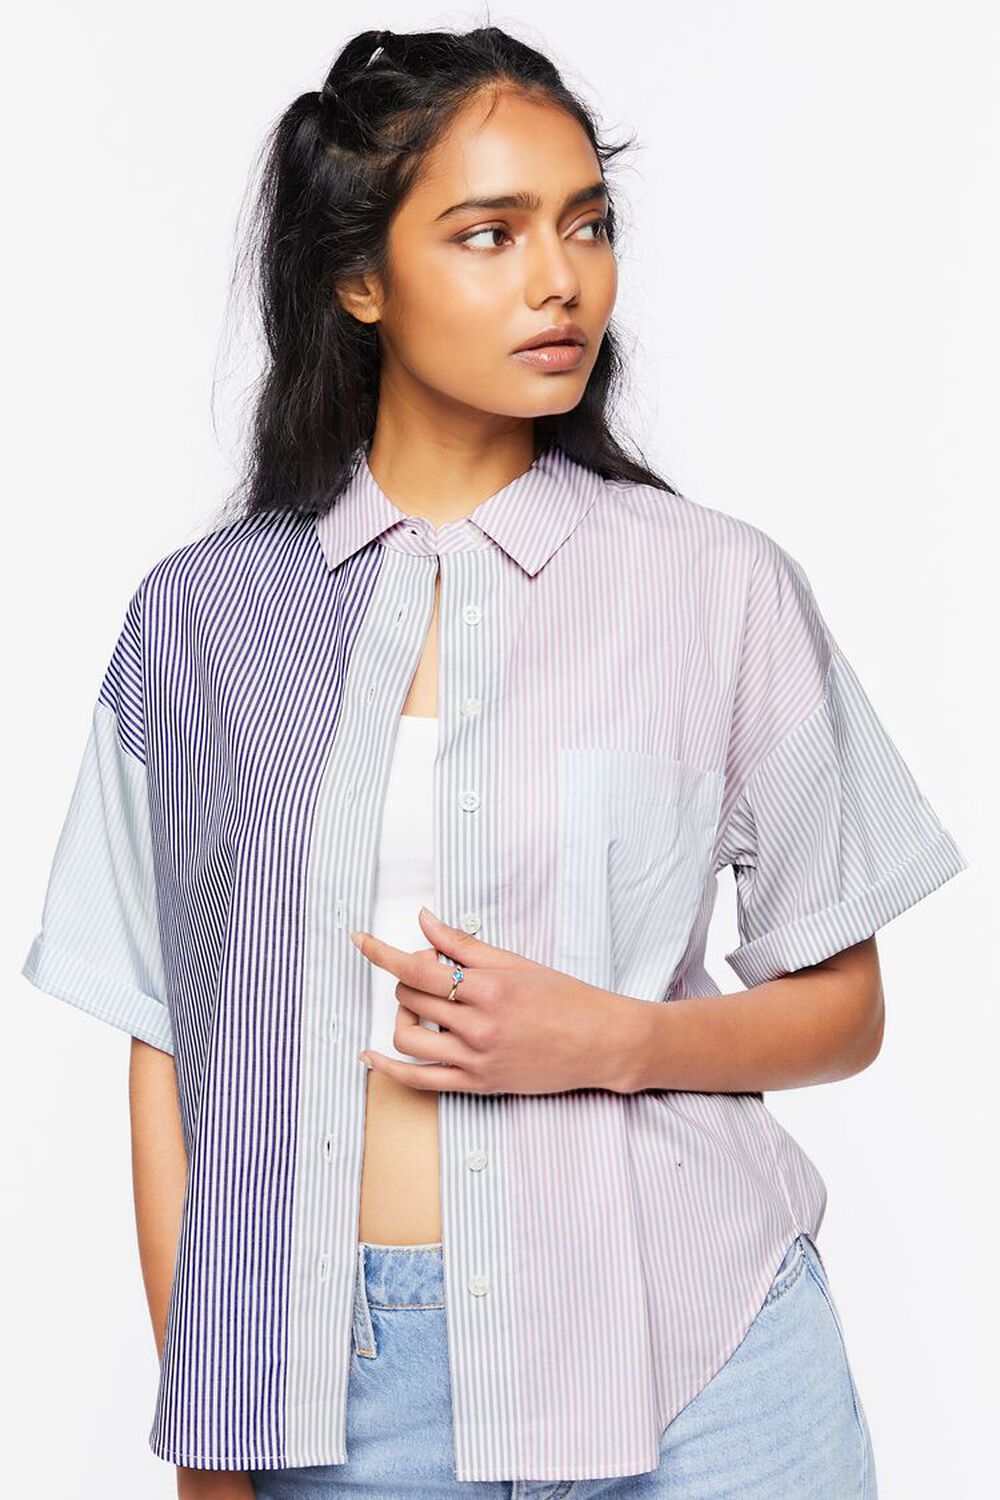 NAVY/MULTI Colorblock Striped Shirt, image 1